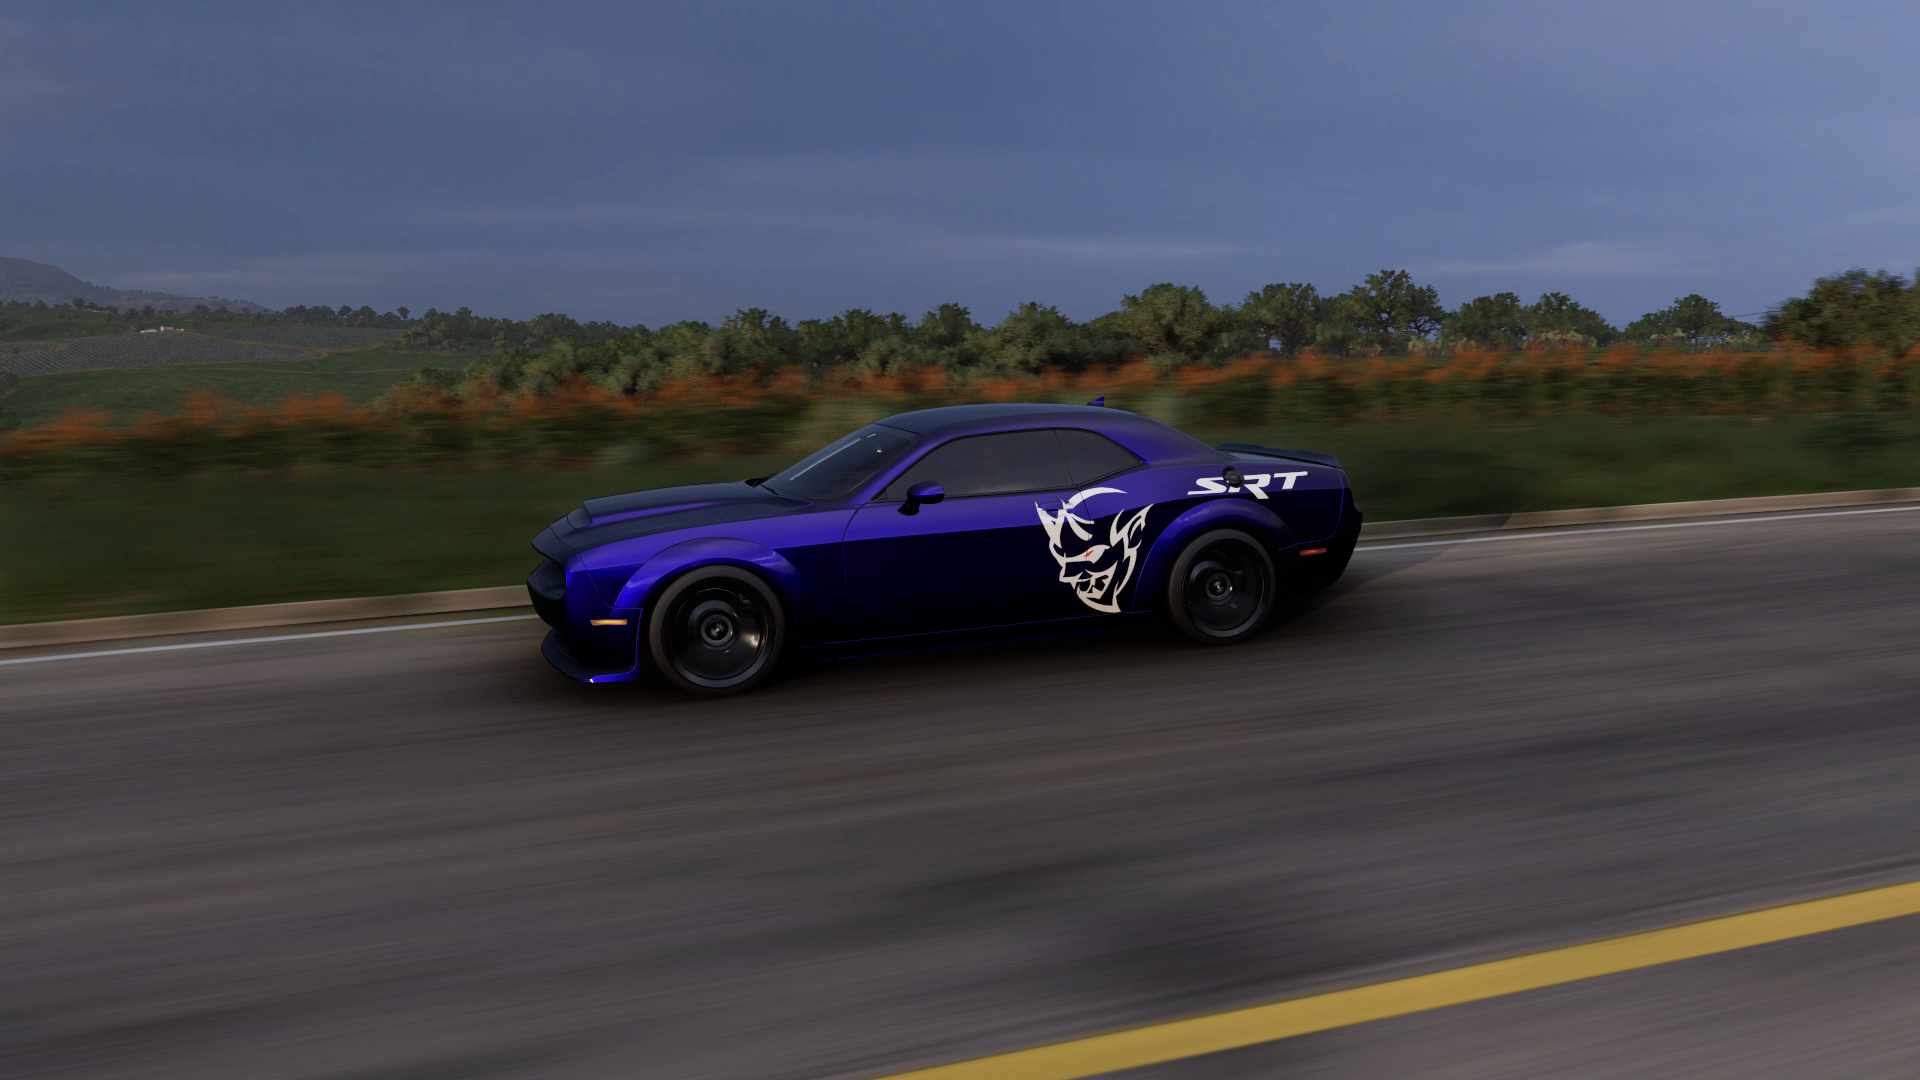 Dodge Challenger Forza Horizon 5 1920x1080